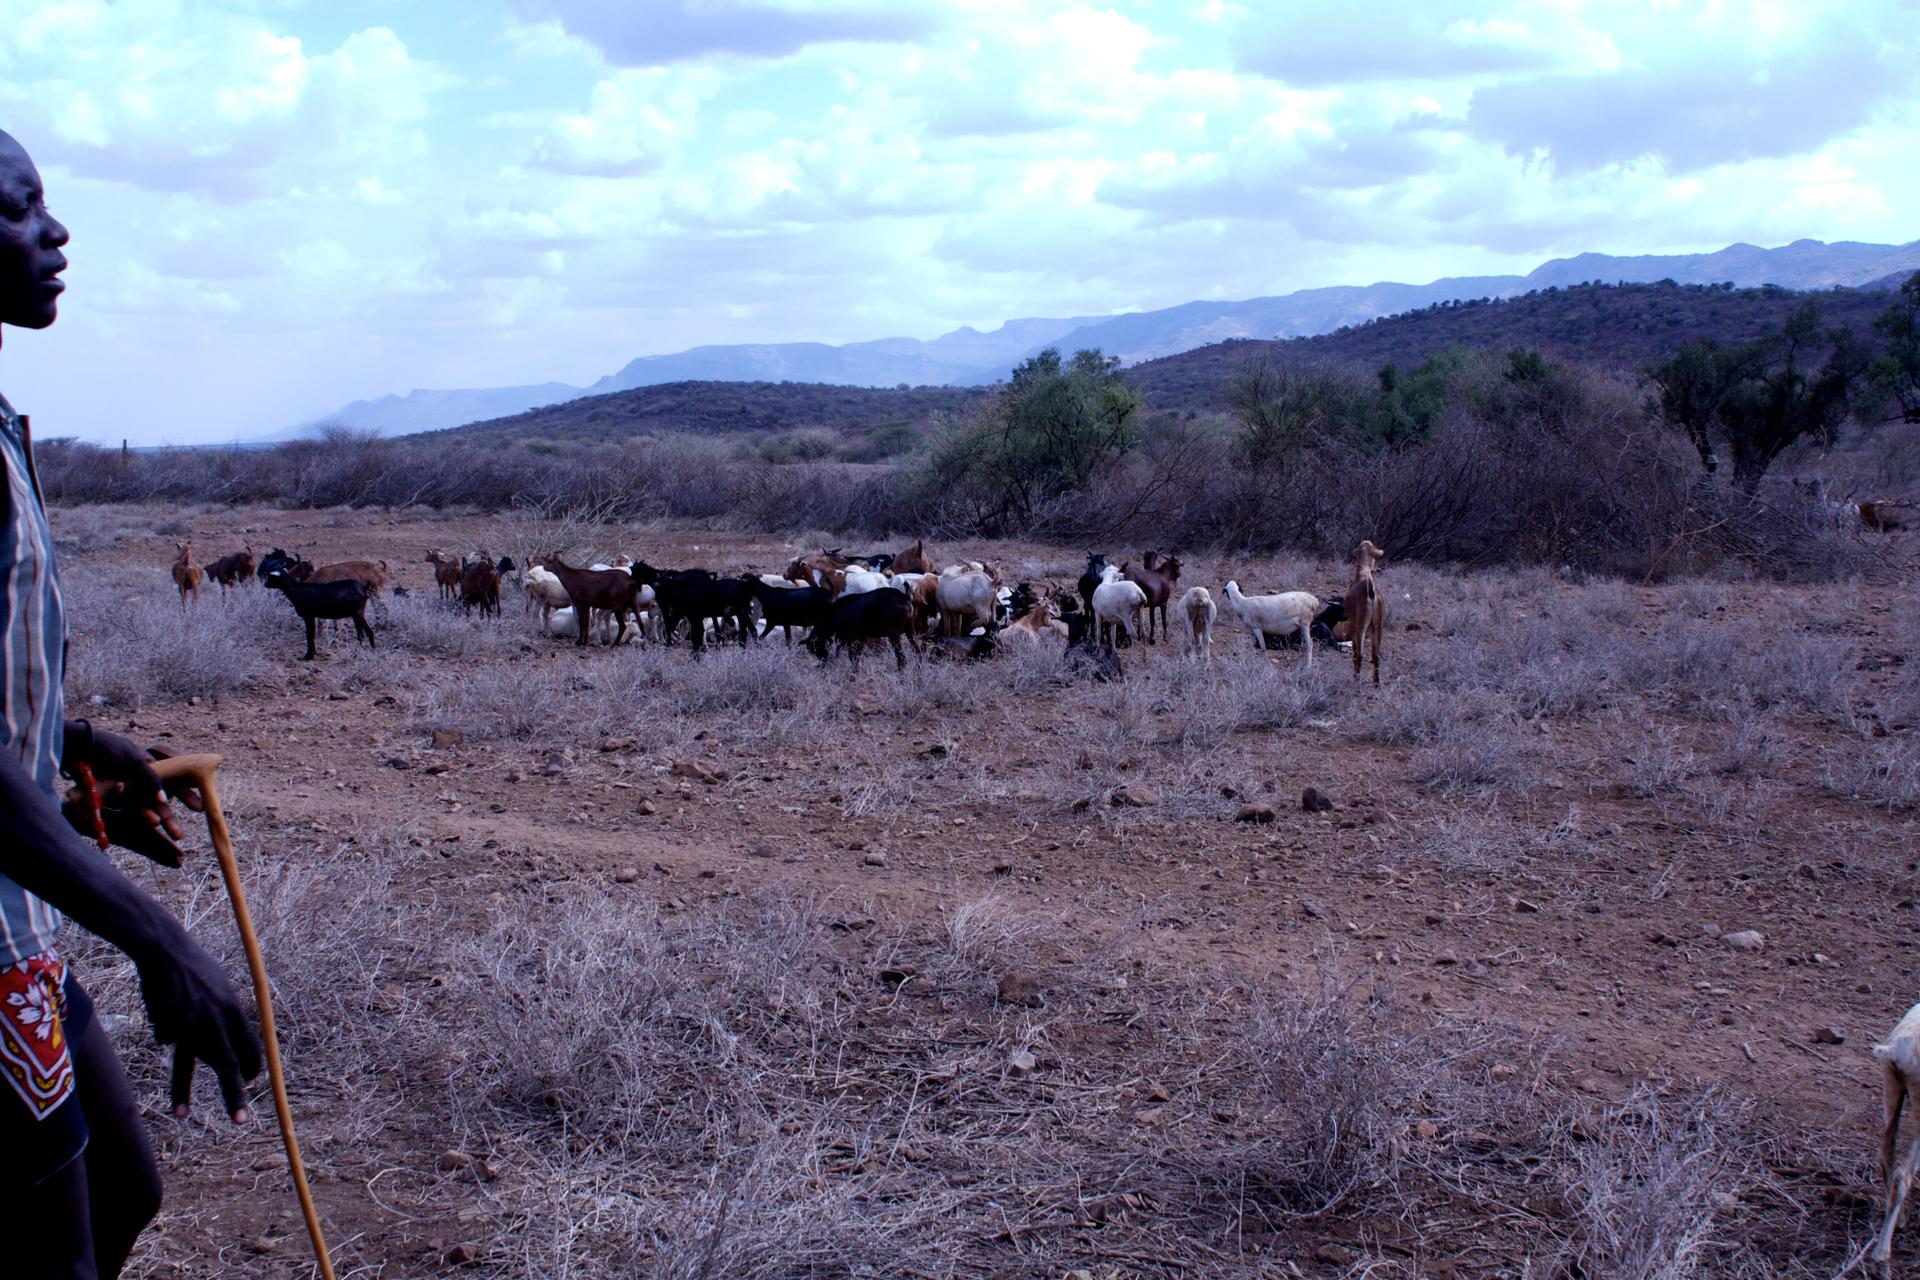 A Turkana man tends to his herd.